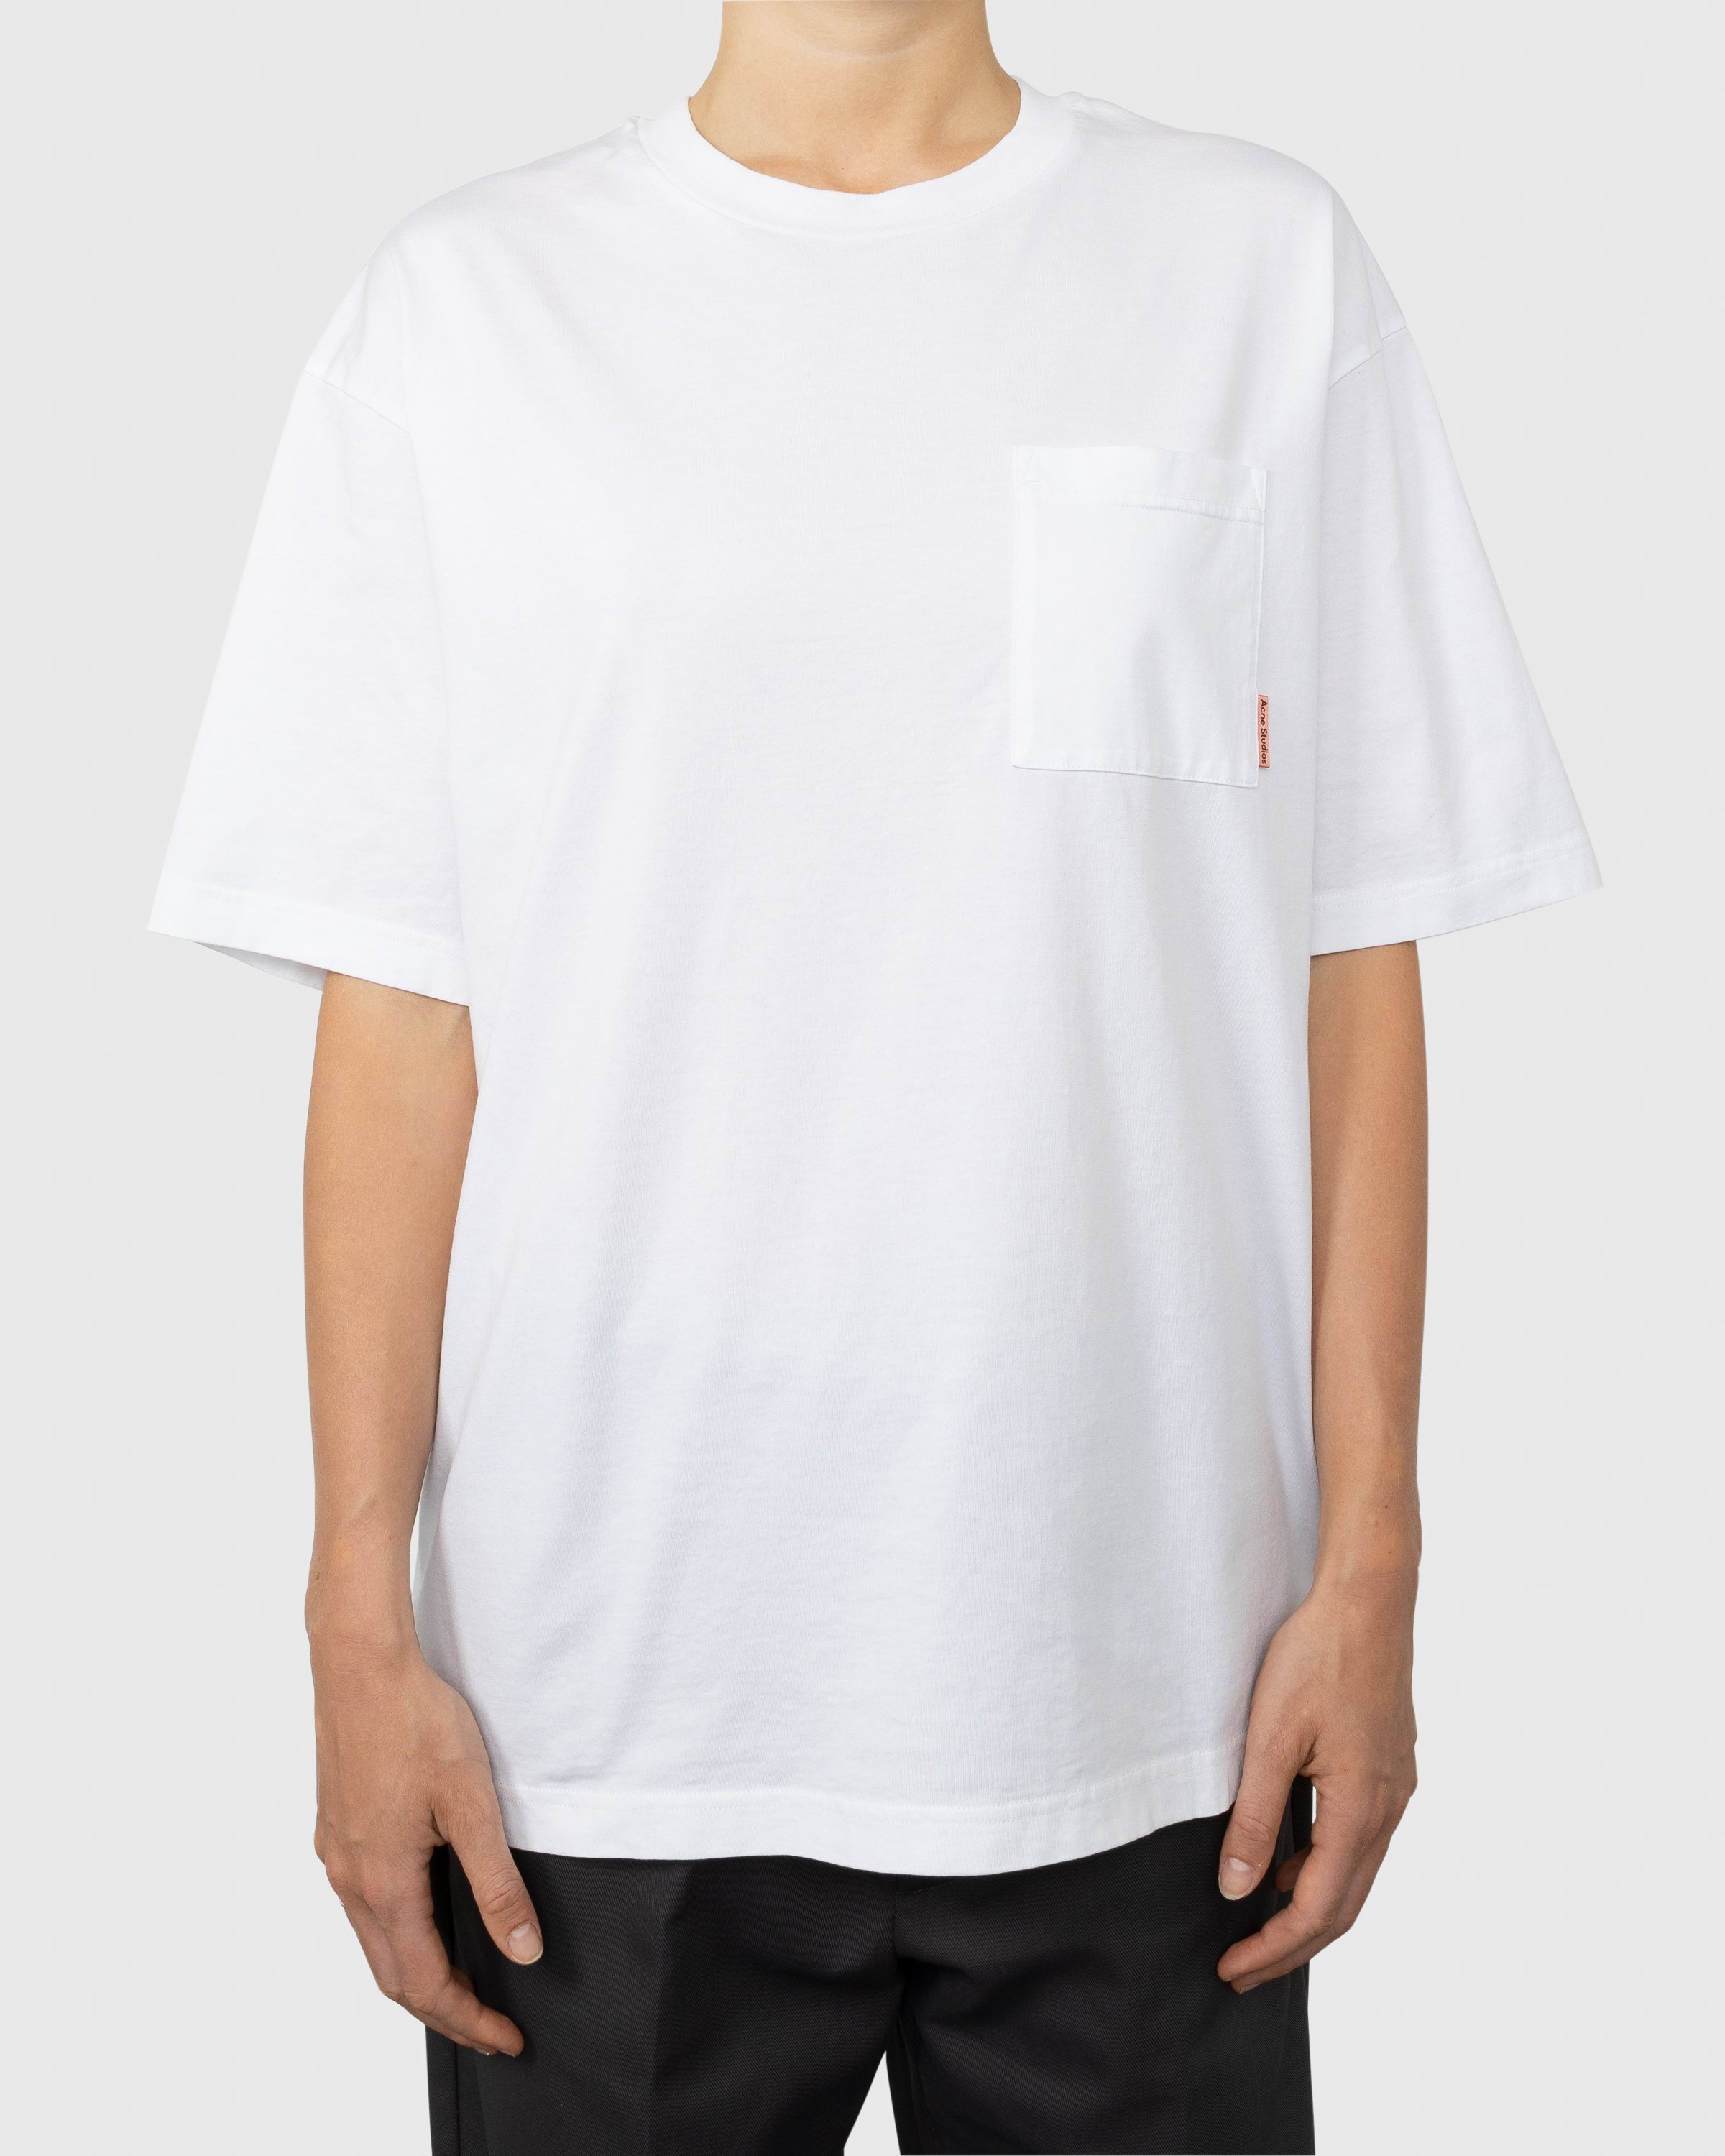 Acne Studios - Organic Cotton Pocket T-Shirt White - Clothing - White - Image 2